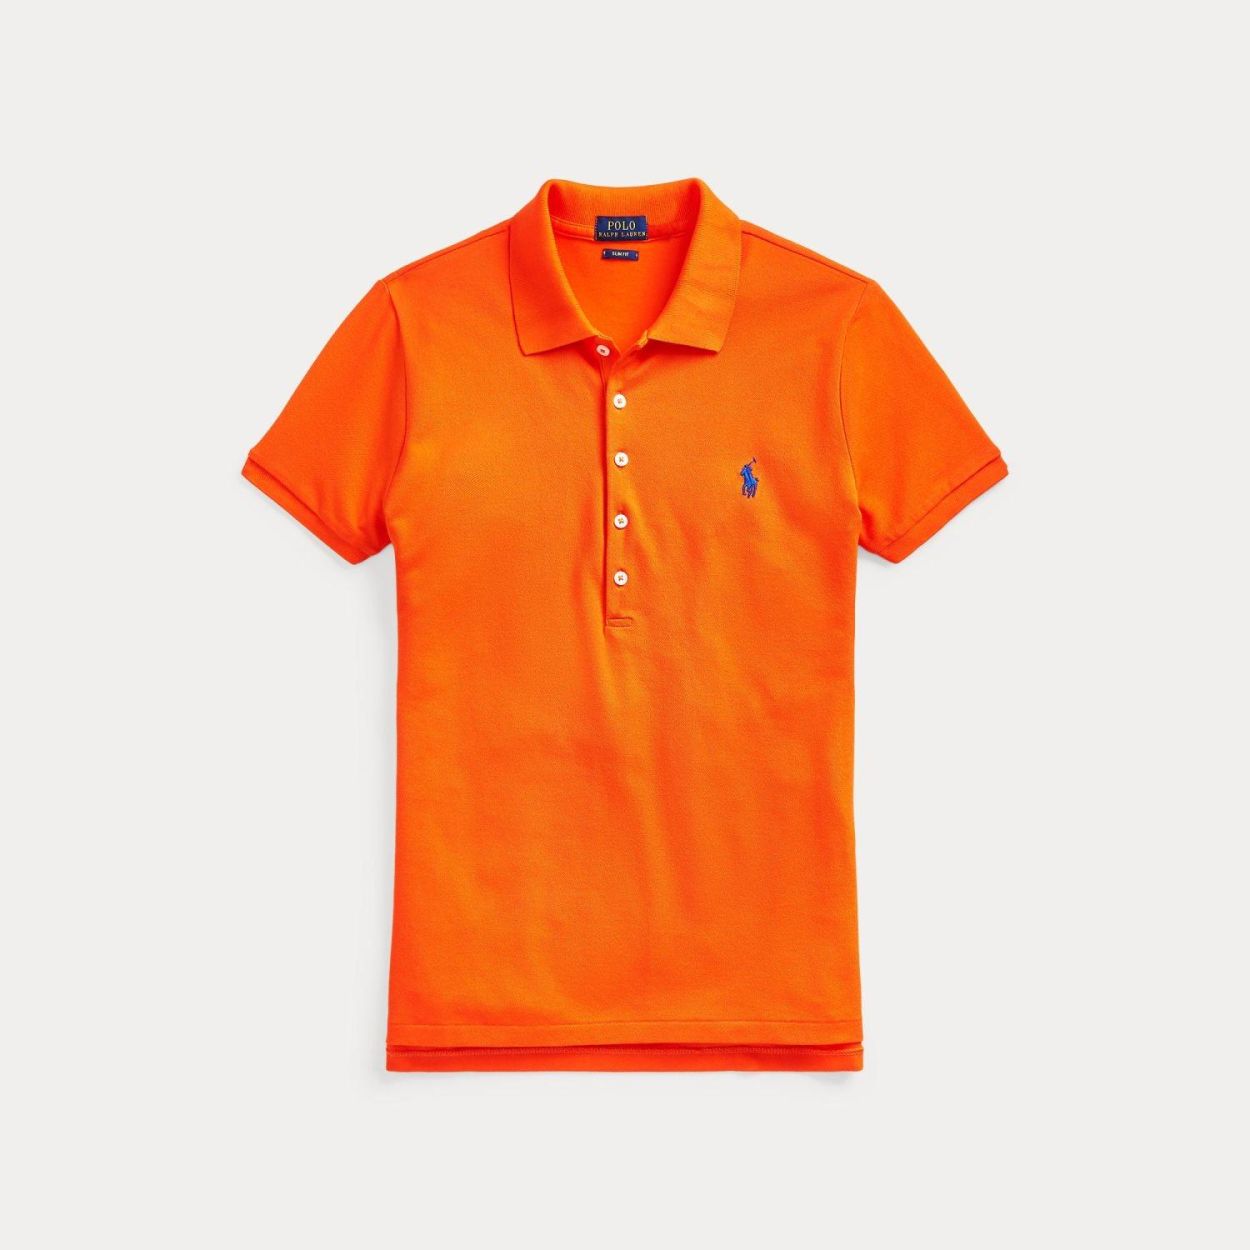 Ralph Lauren Polo Oranje  (211870245032/Orange) - Corylie (Roeselare)